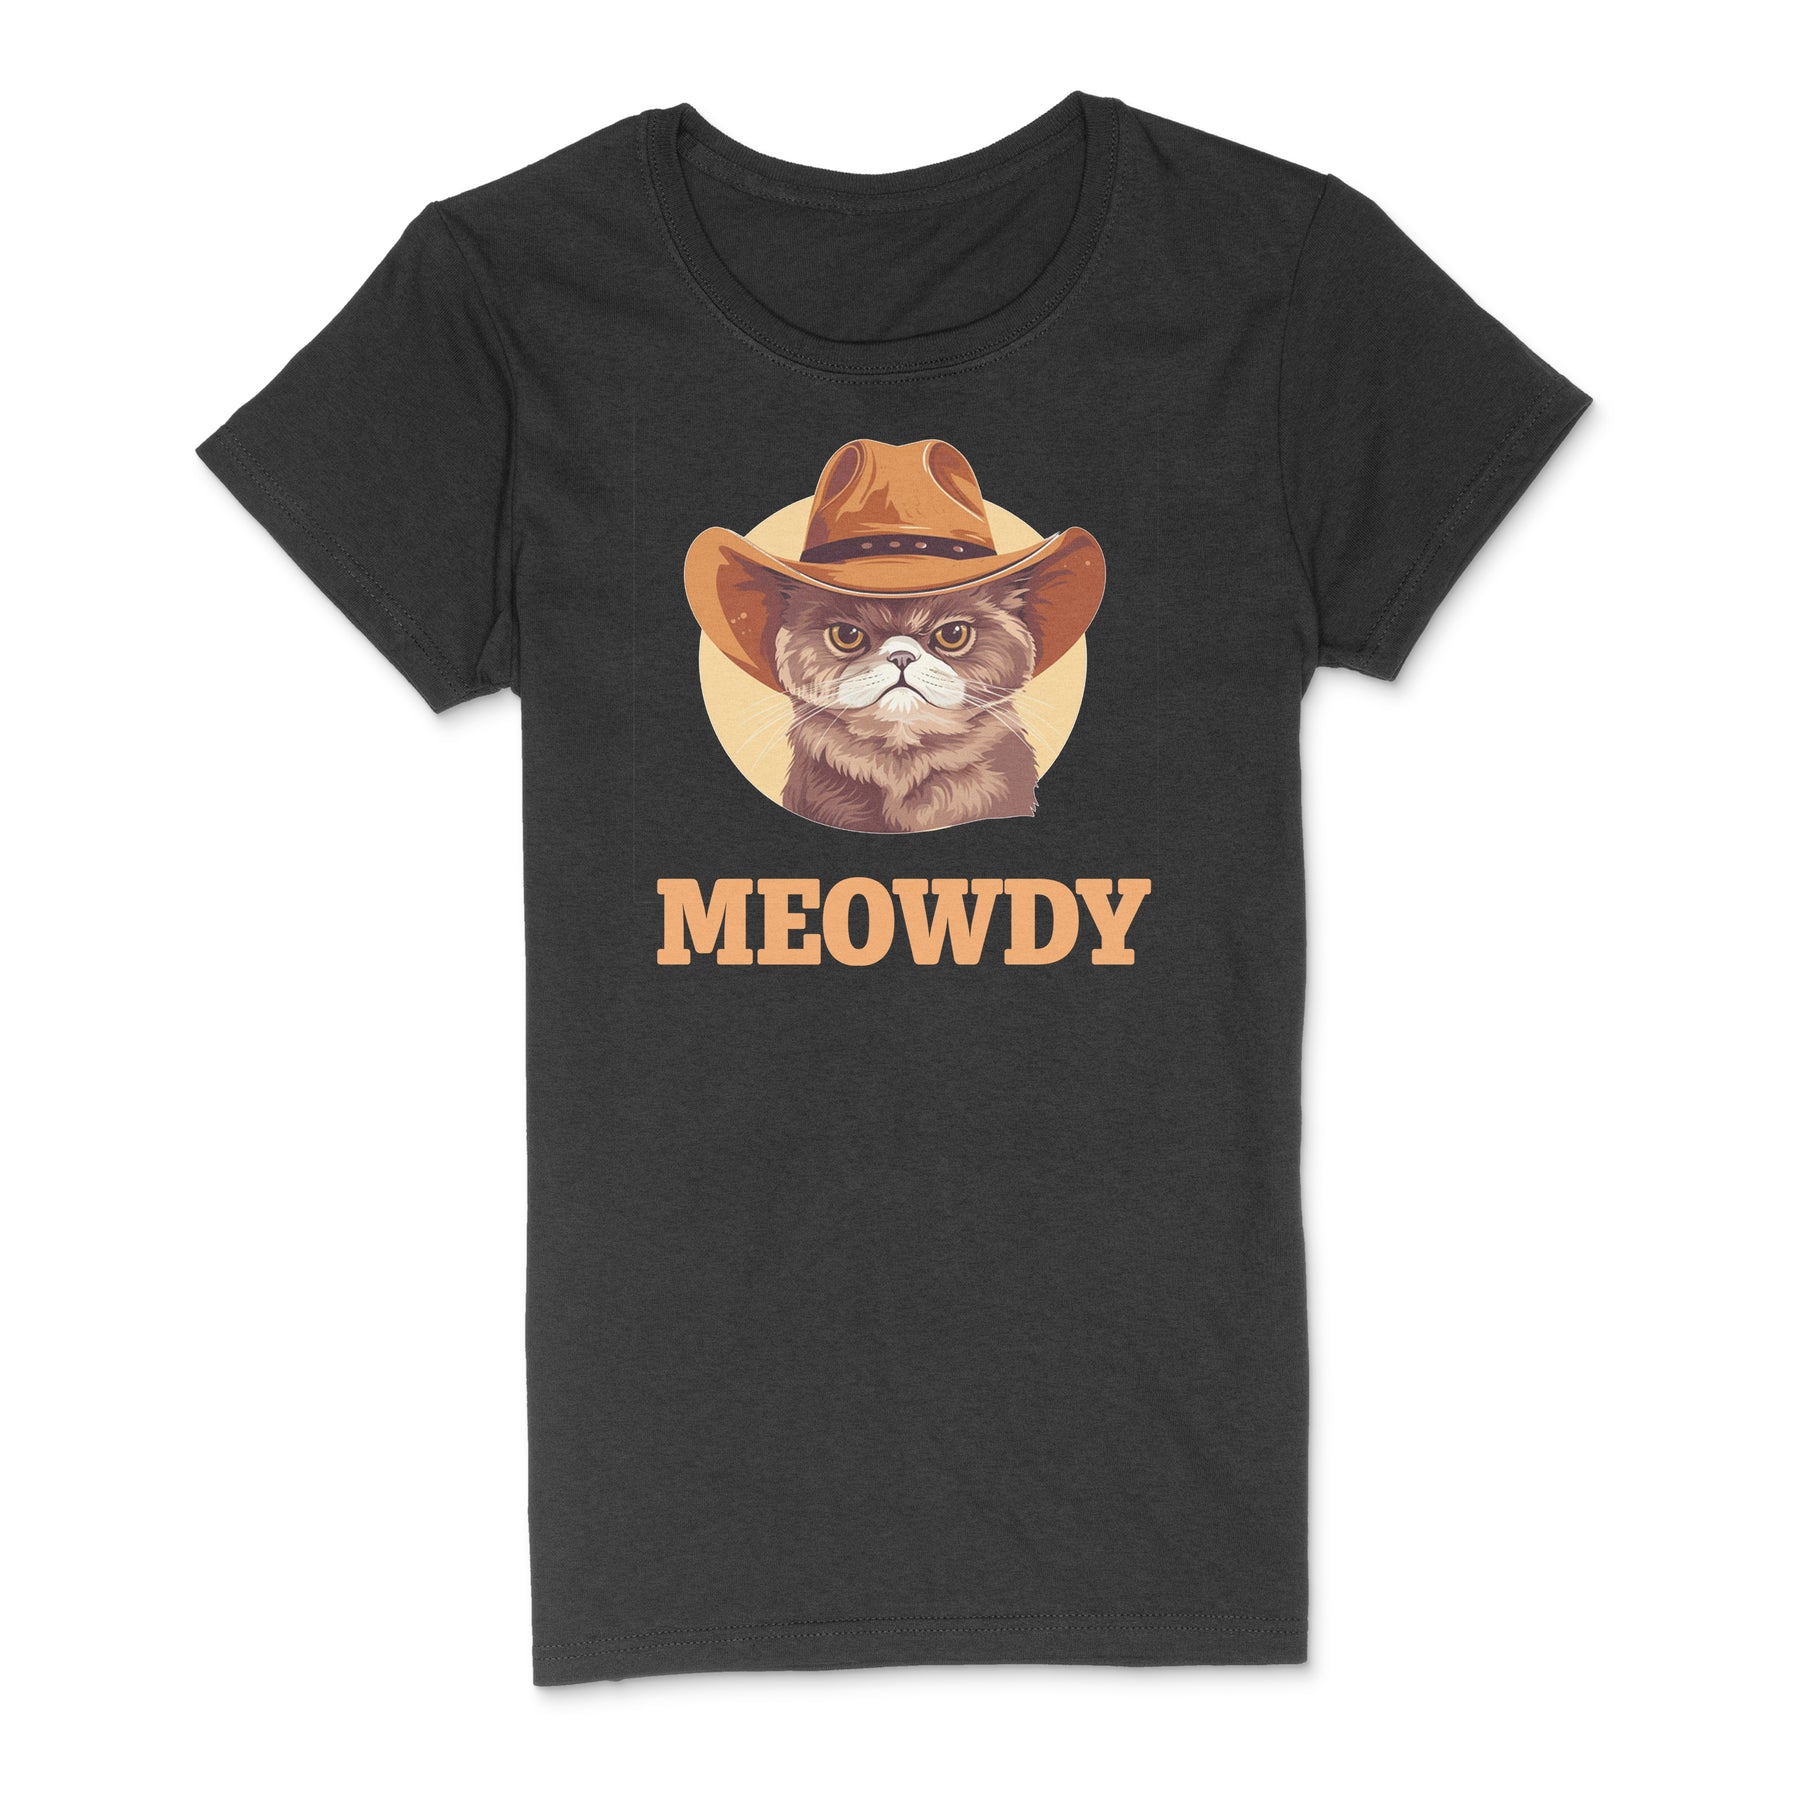 "Meowdy" Premium Midweight Ringspun Cotton T-Shirt - Mens/Womens Fits